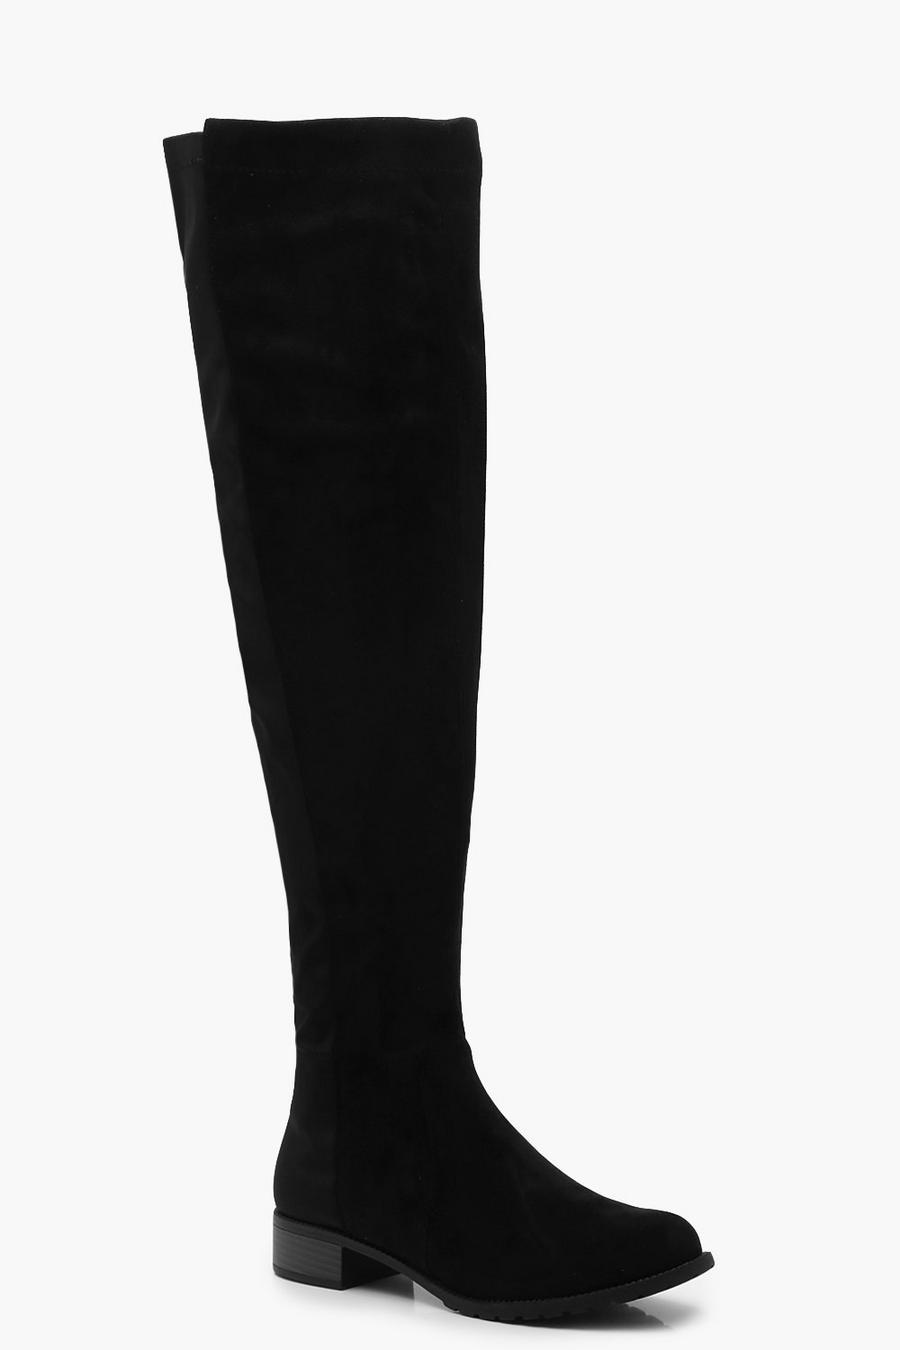 Wider Calf Flat Knee High Boots | Boohoo UK